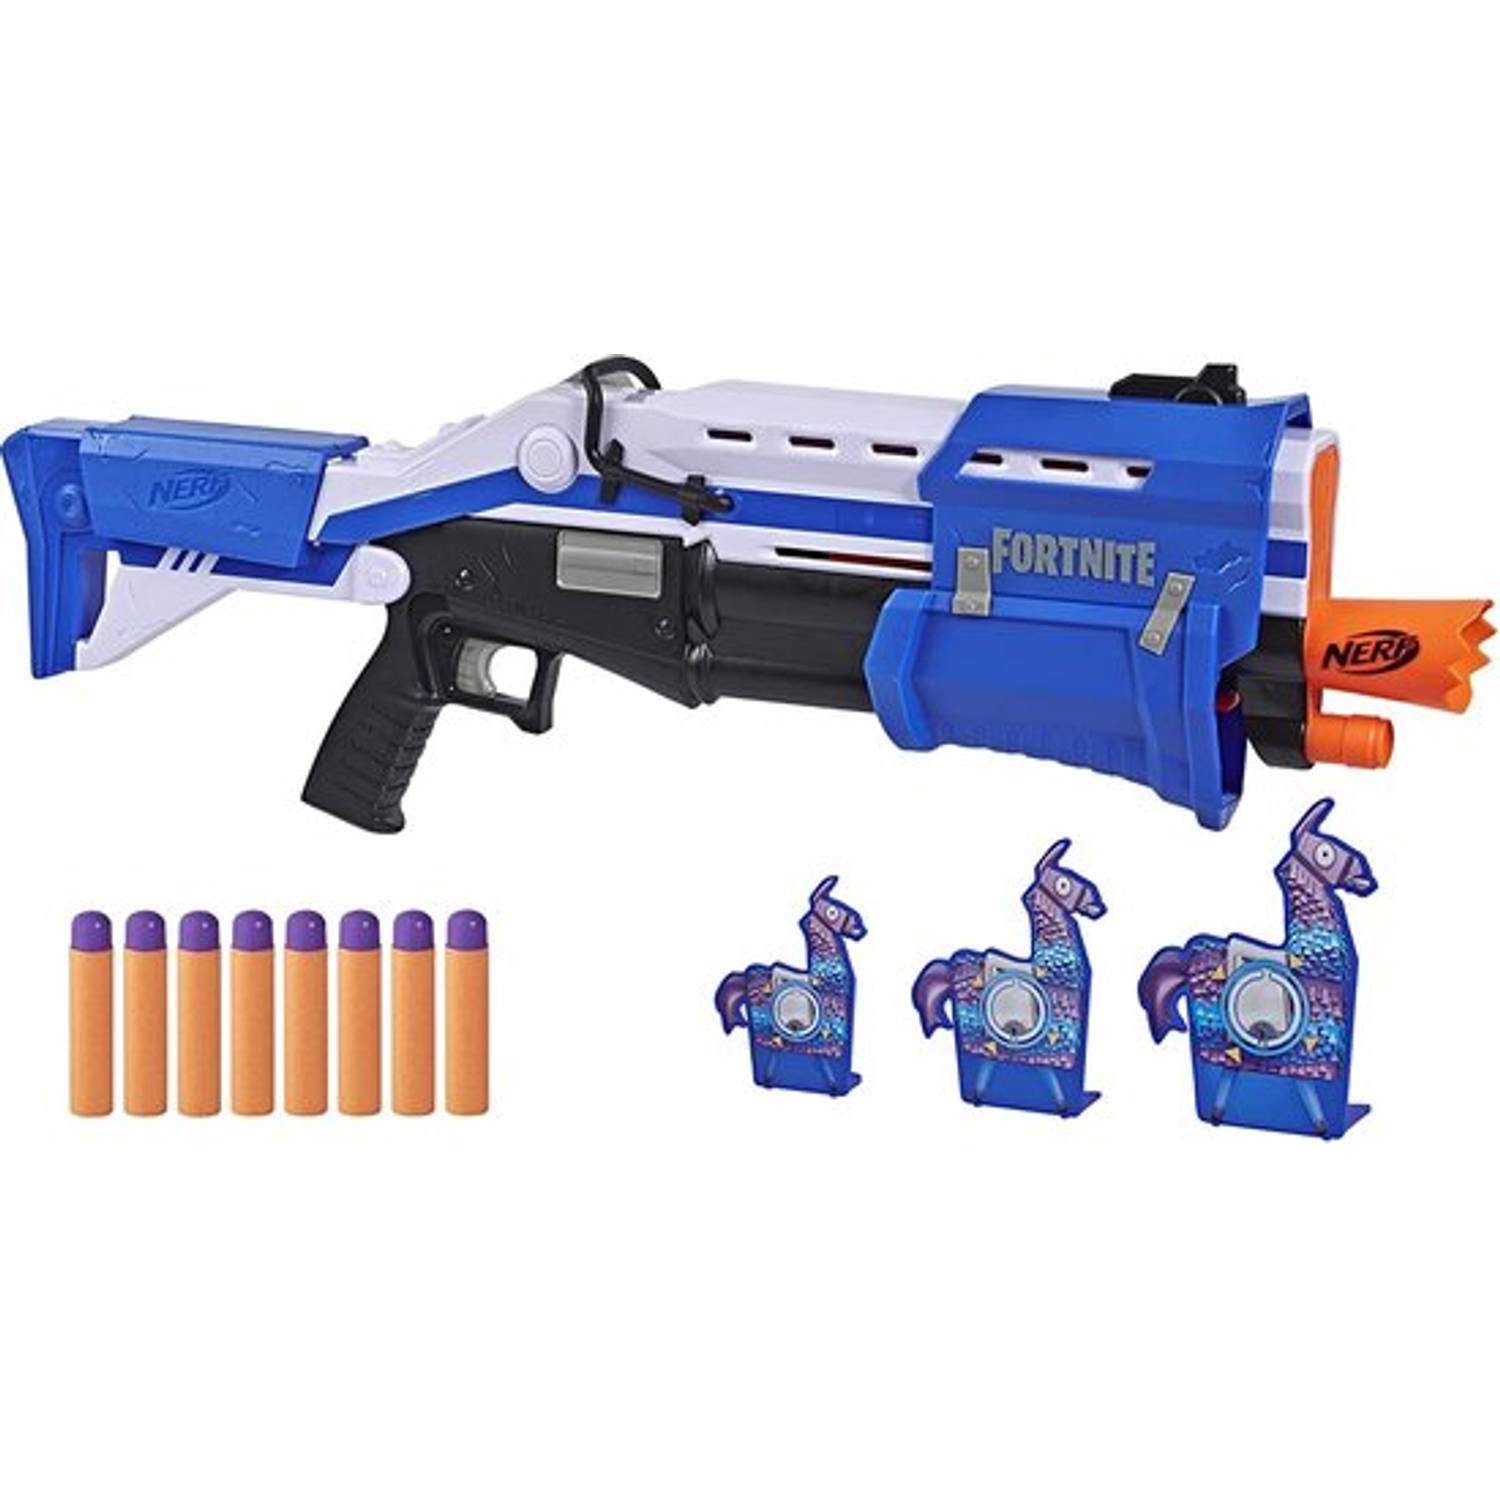 Nerf - Fortnite TS - Blaster - Blauw - Met Lama Targets - Special Edition